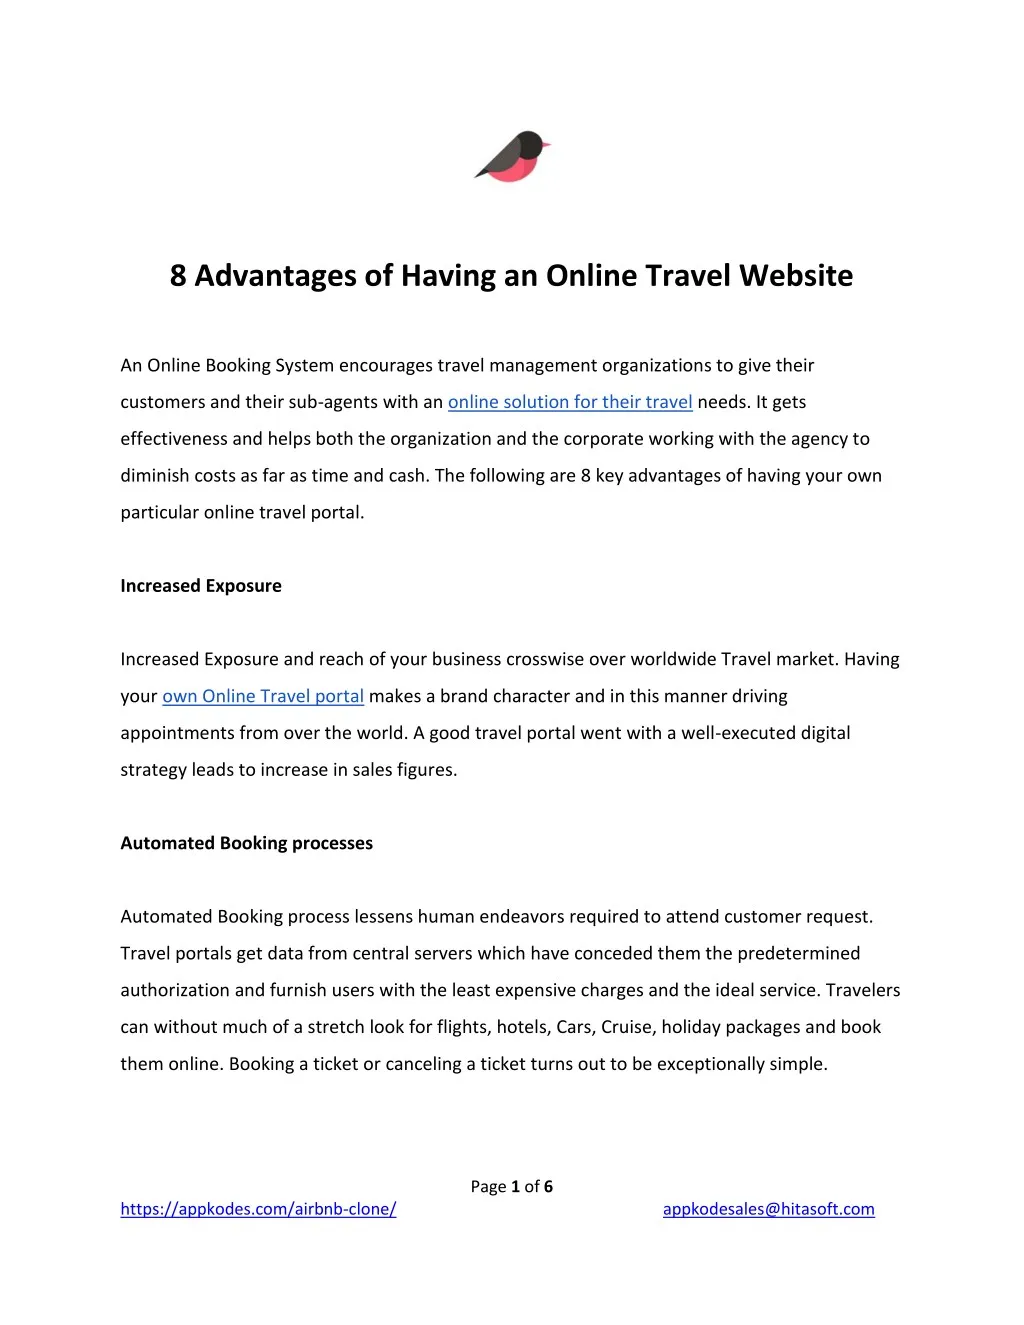 8 advantages of having an online travel website